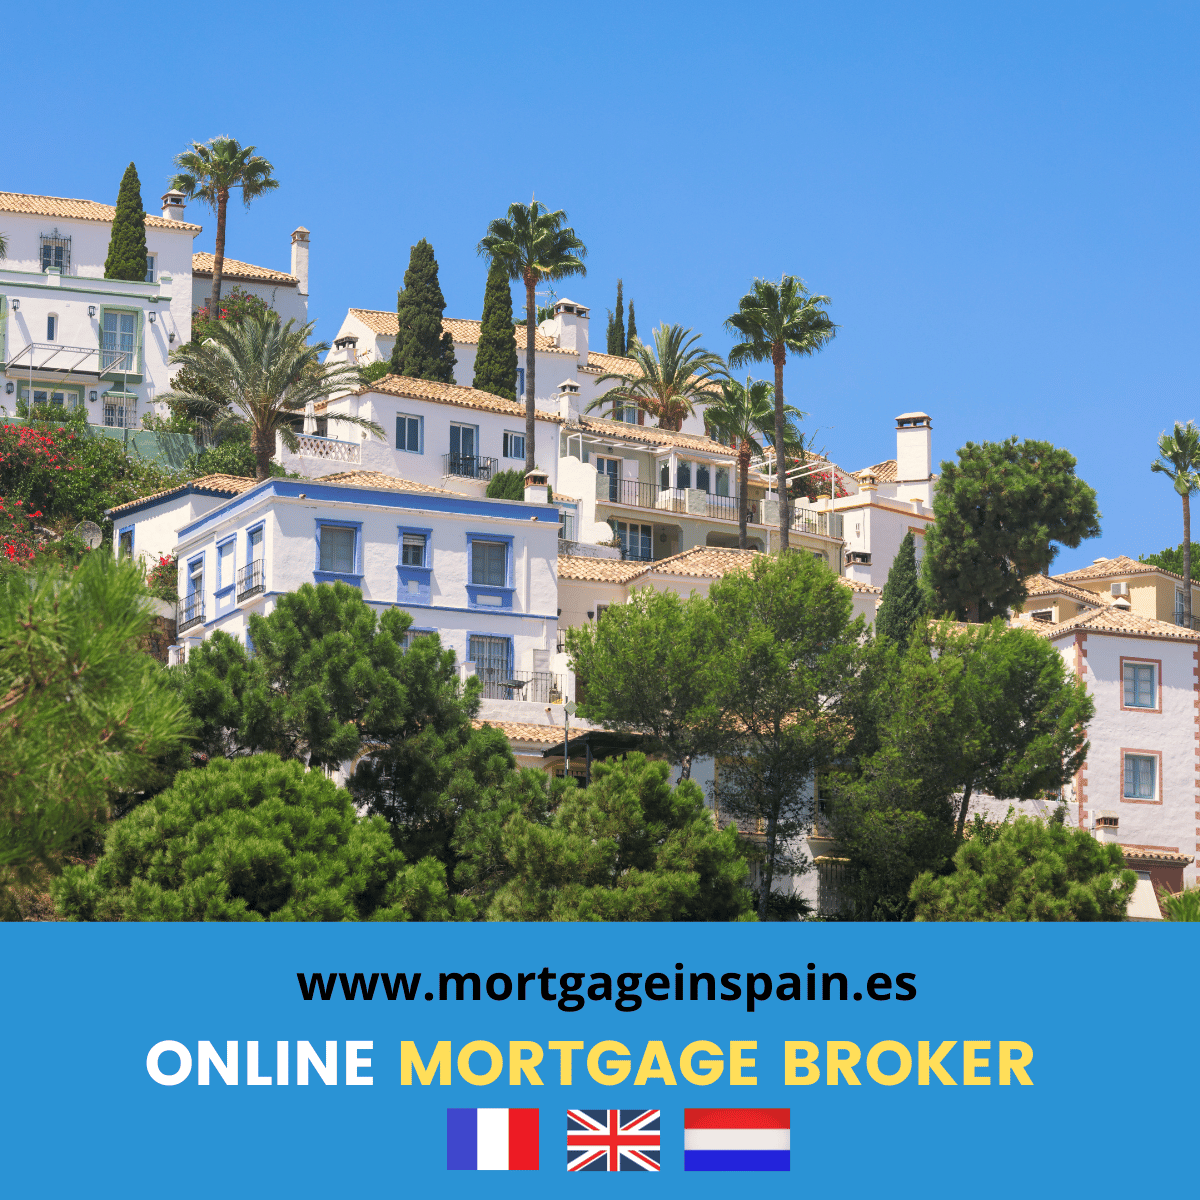 Mortgage Broker Costa del Sol